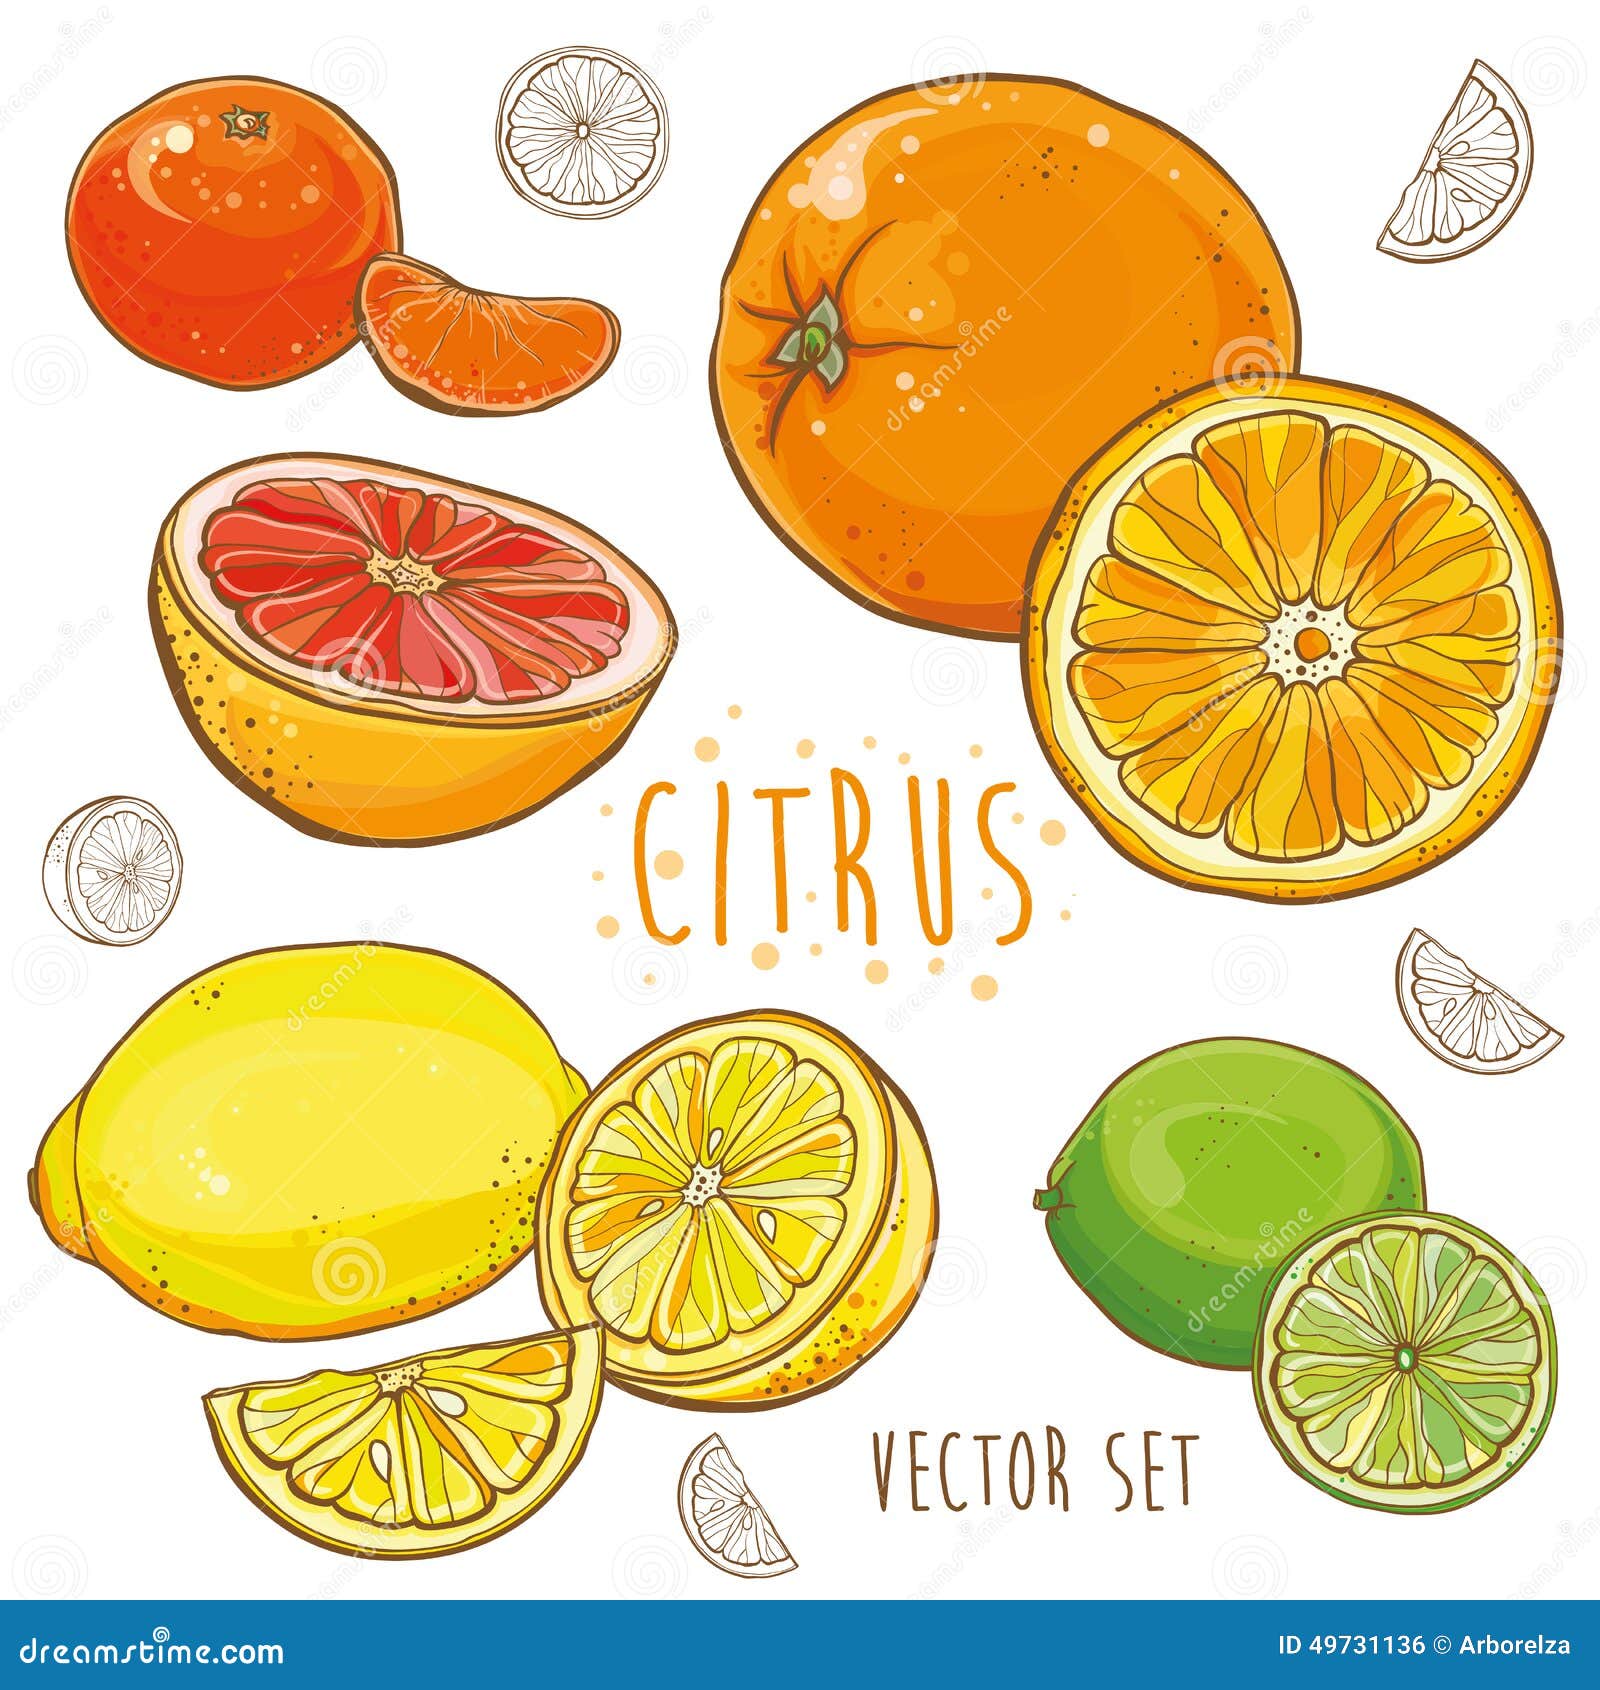  set with citrus fruit: lemon, lime, orange, tangerine